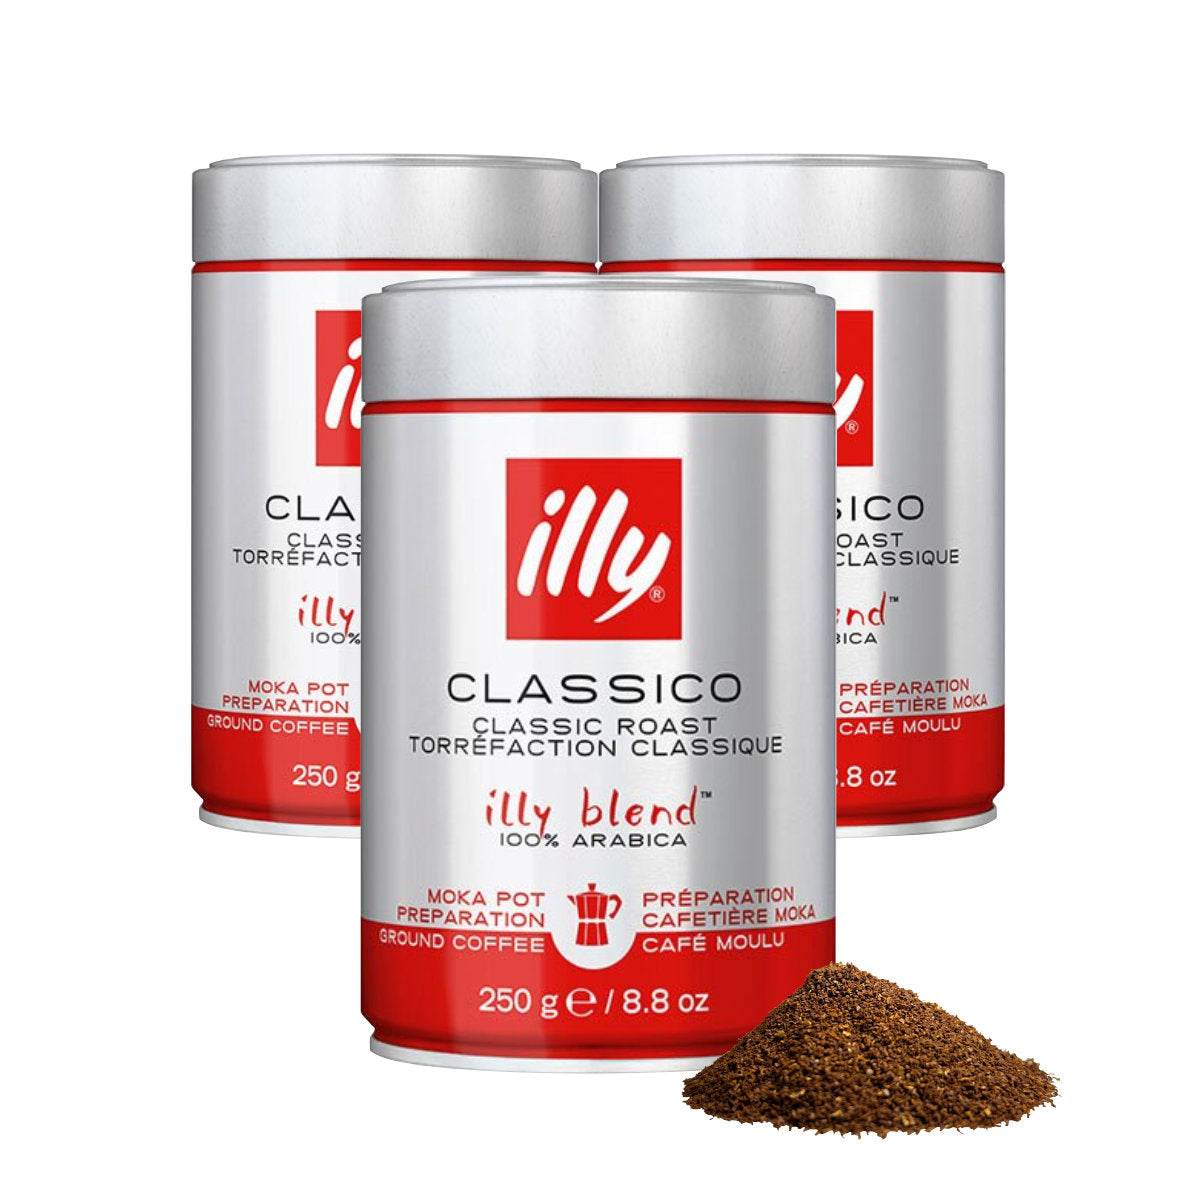 illy Ground Moka Coffee - Medium Roast (250g)